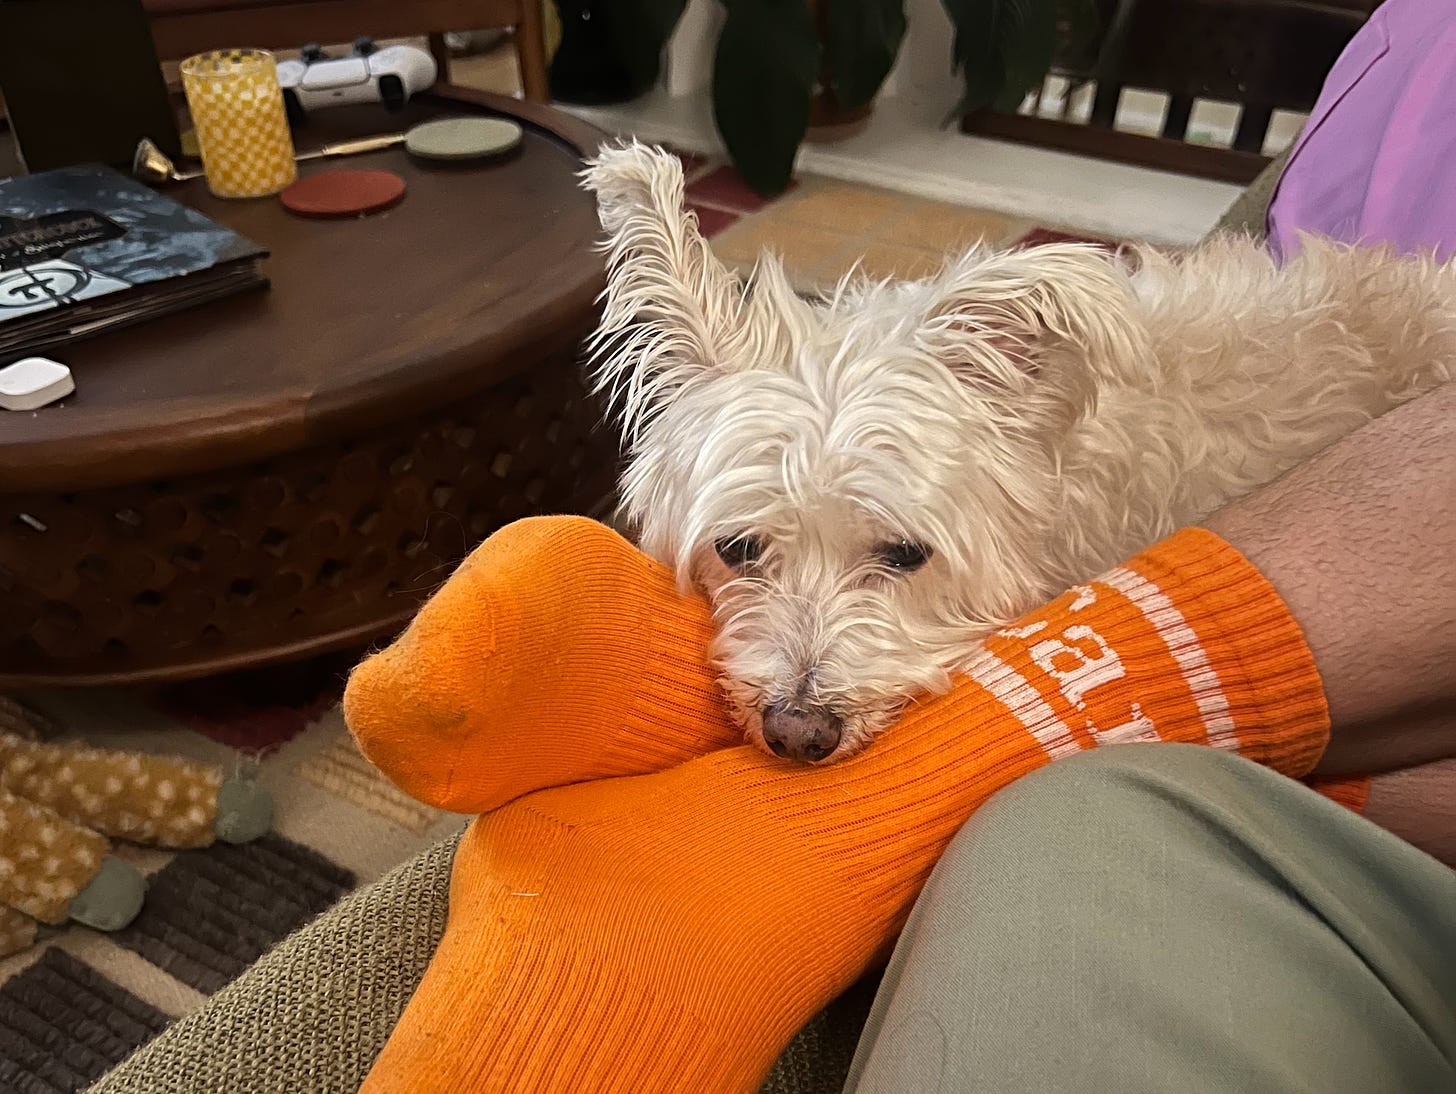 A small dog nestled into my socks looking sad